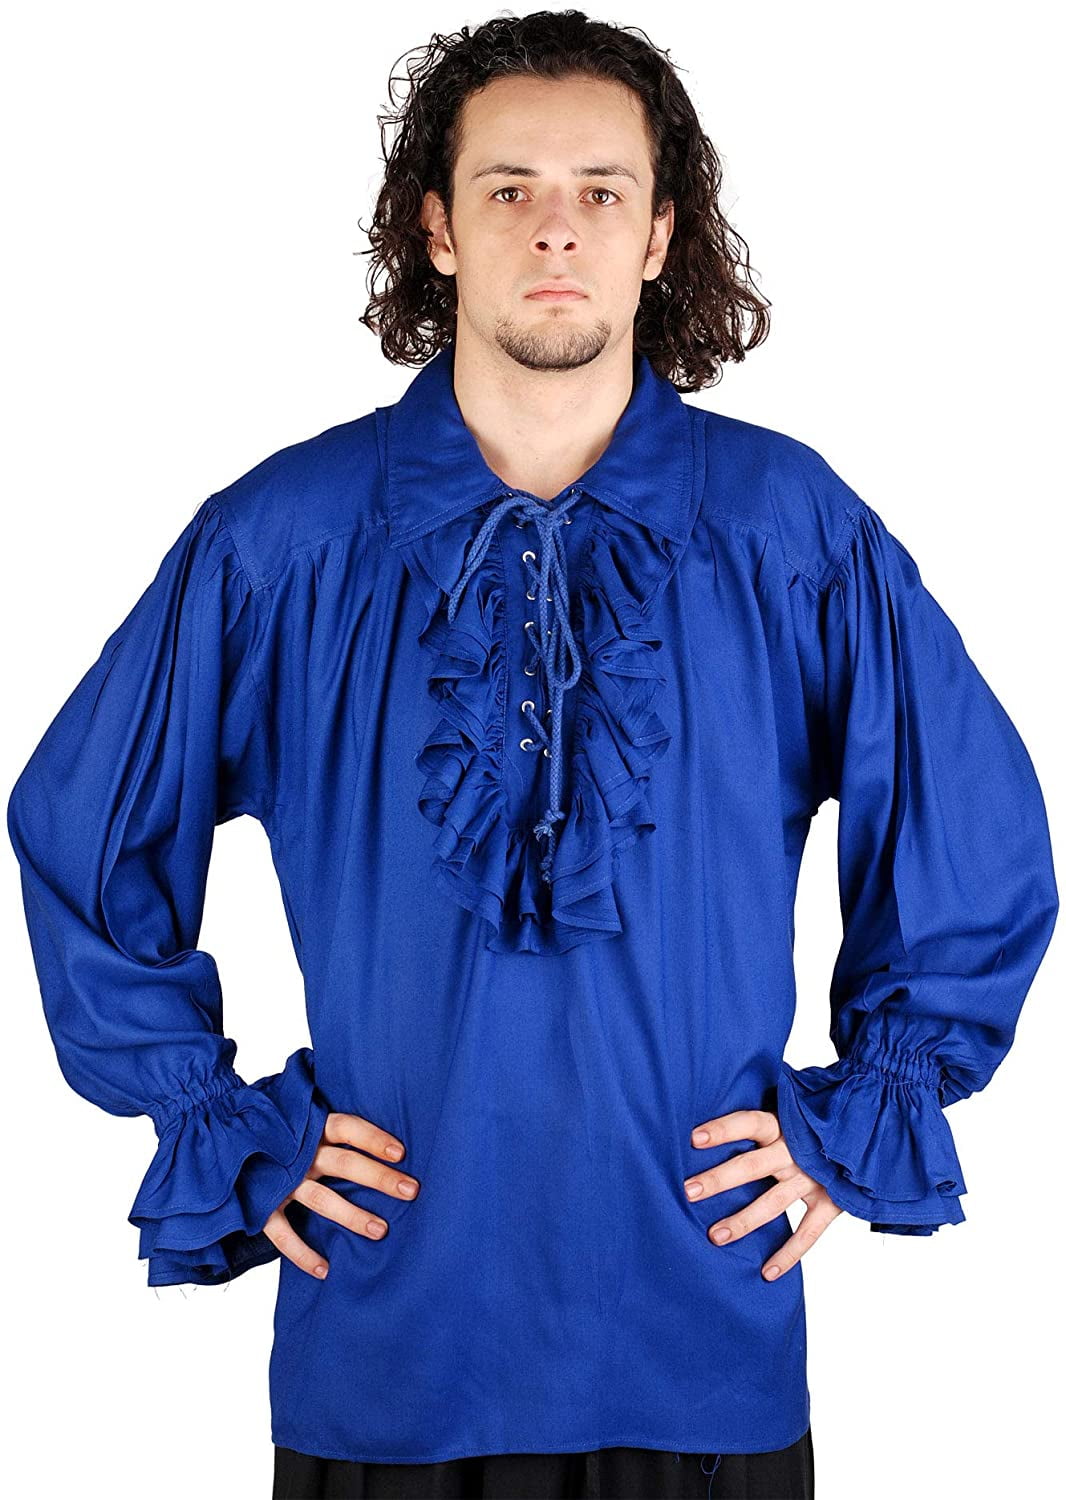 Medieval Poet's Pirate Shirt Costume [Blue] (X-Large) - Walmart.com